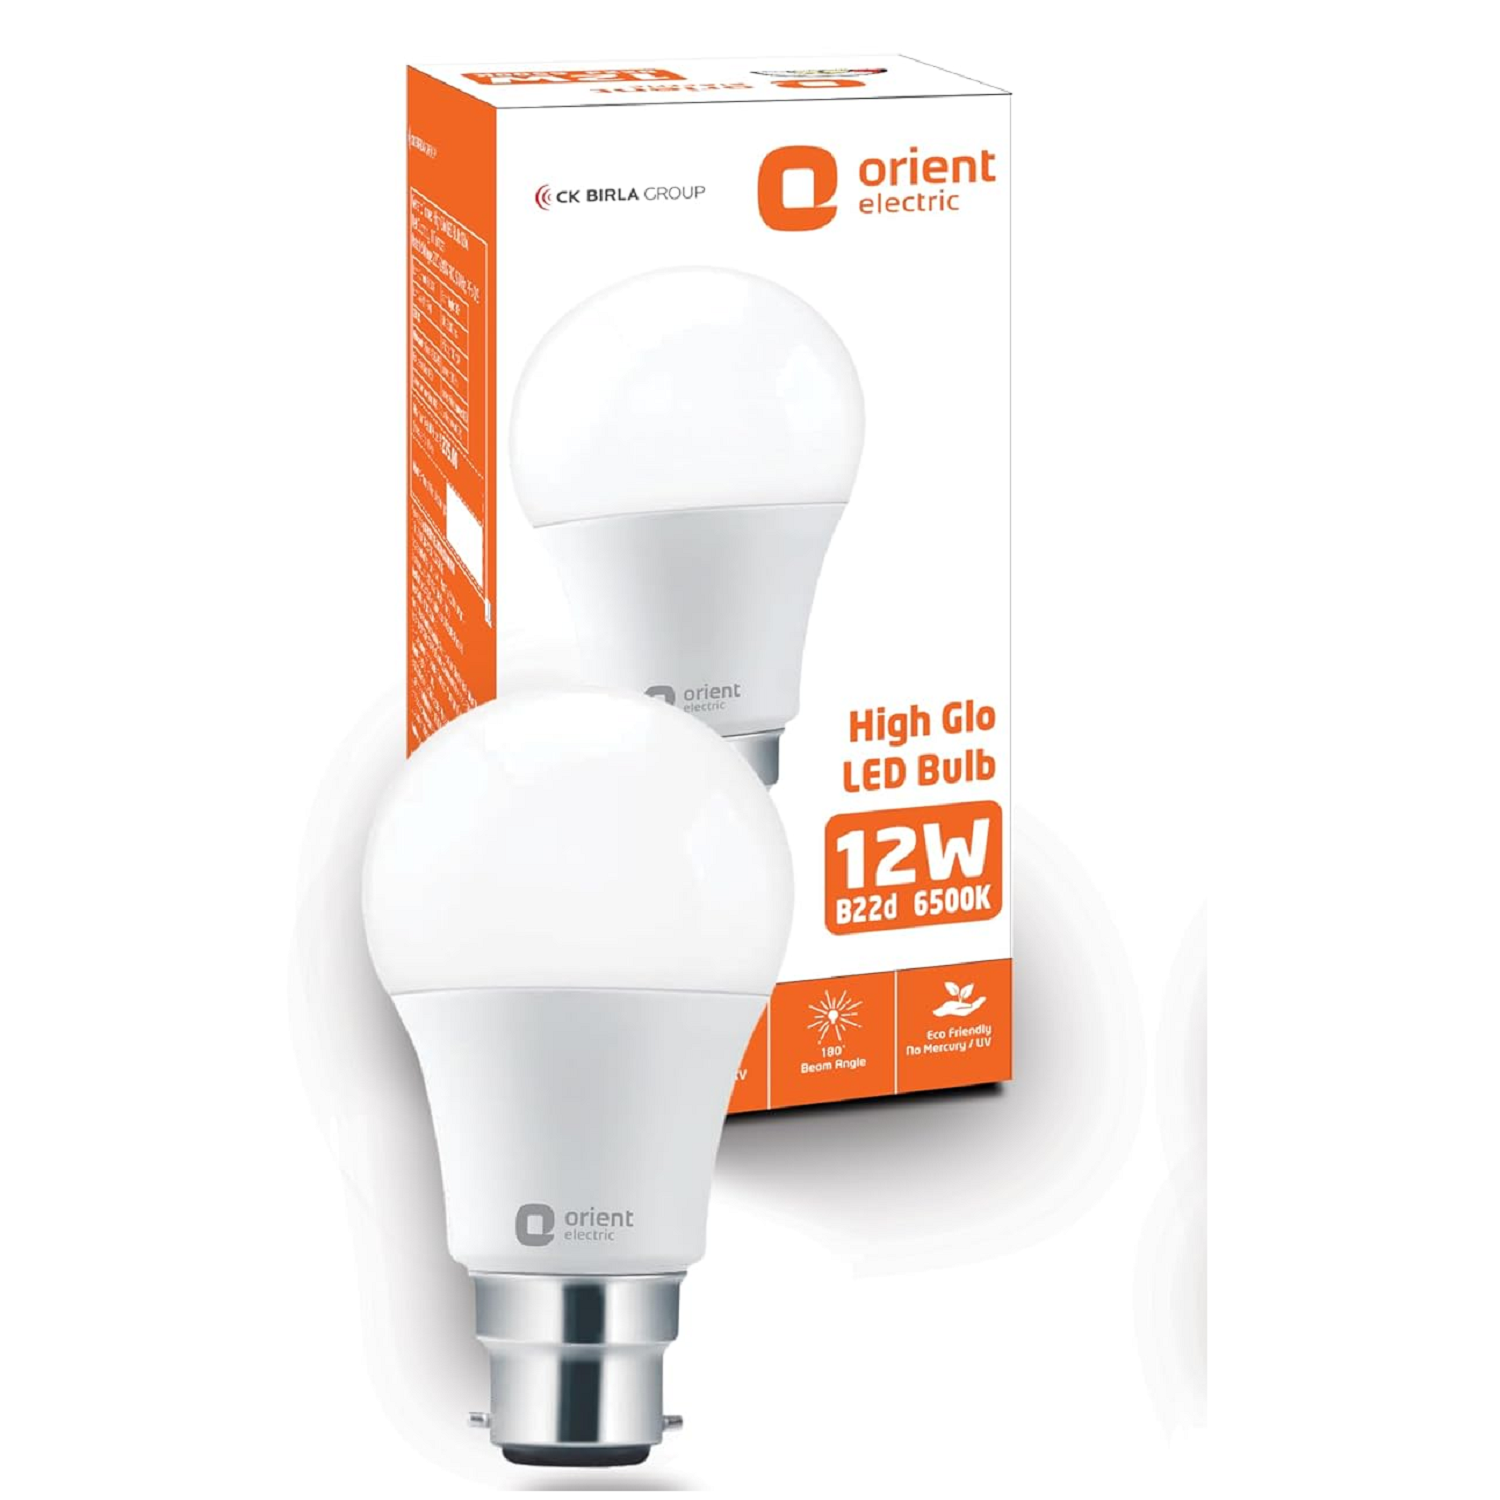 Orient 12W Emergency LED Bulb ,rechargebale inverter led bulb(Cool white)